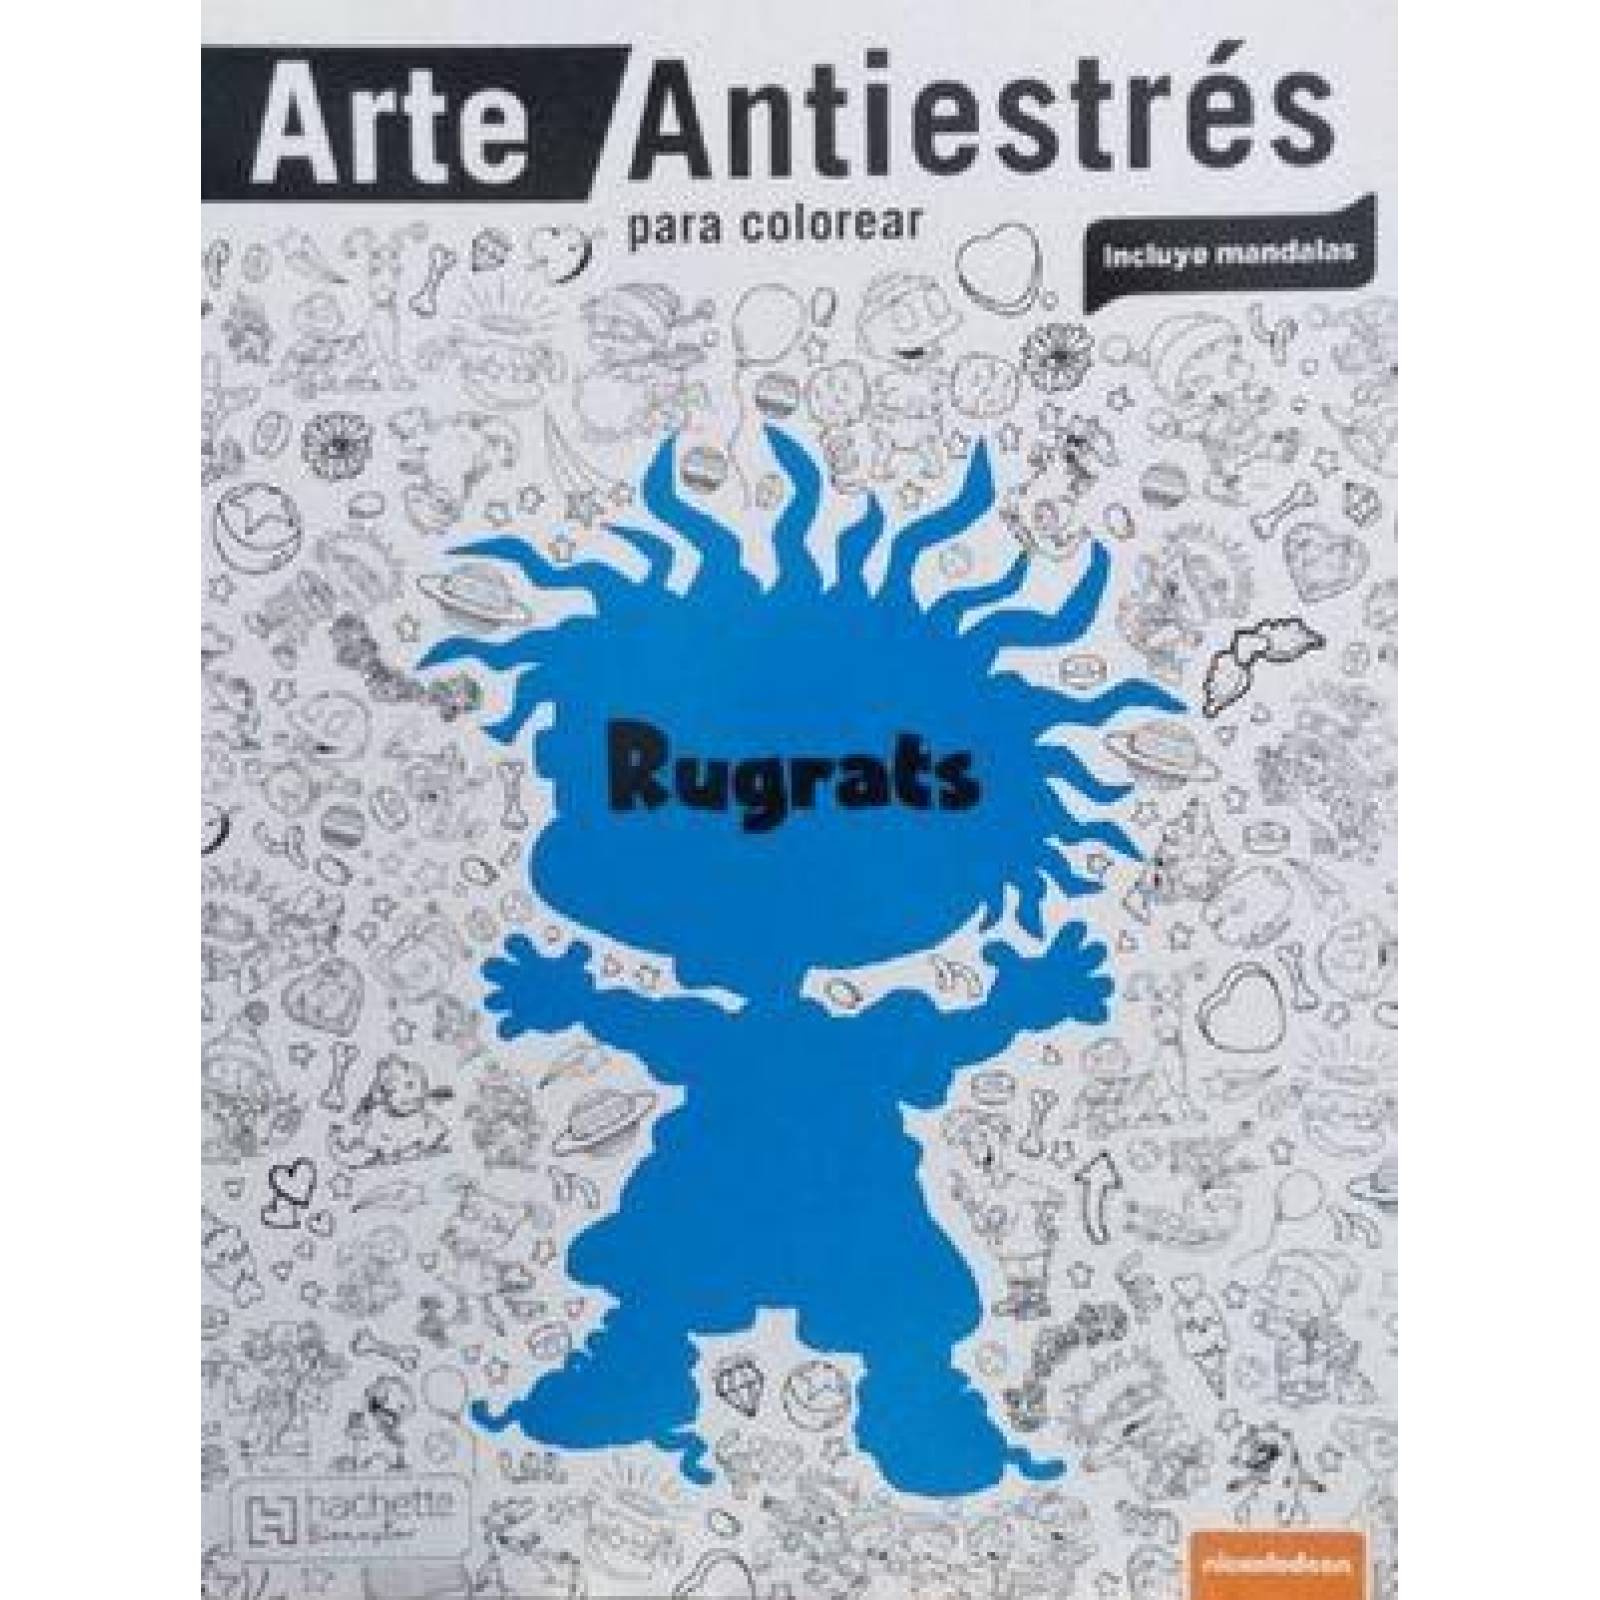 Rugrats Arte antiestrés 